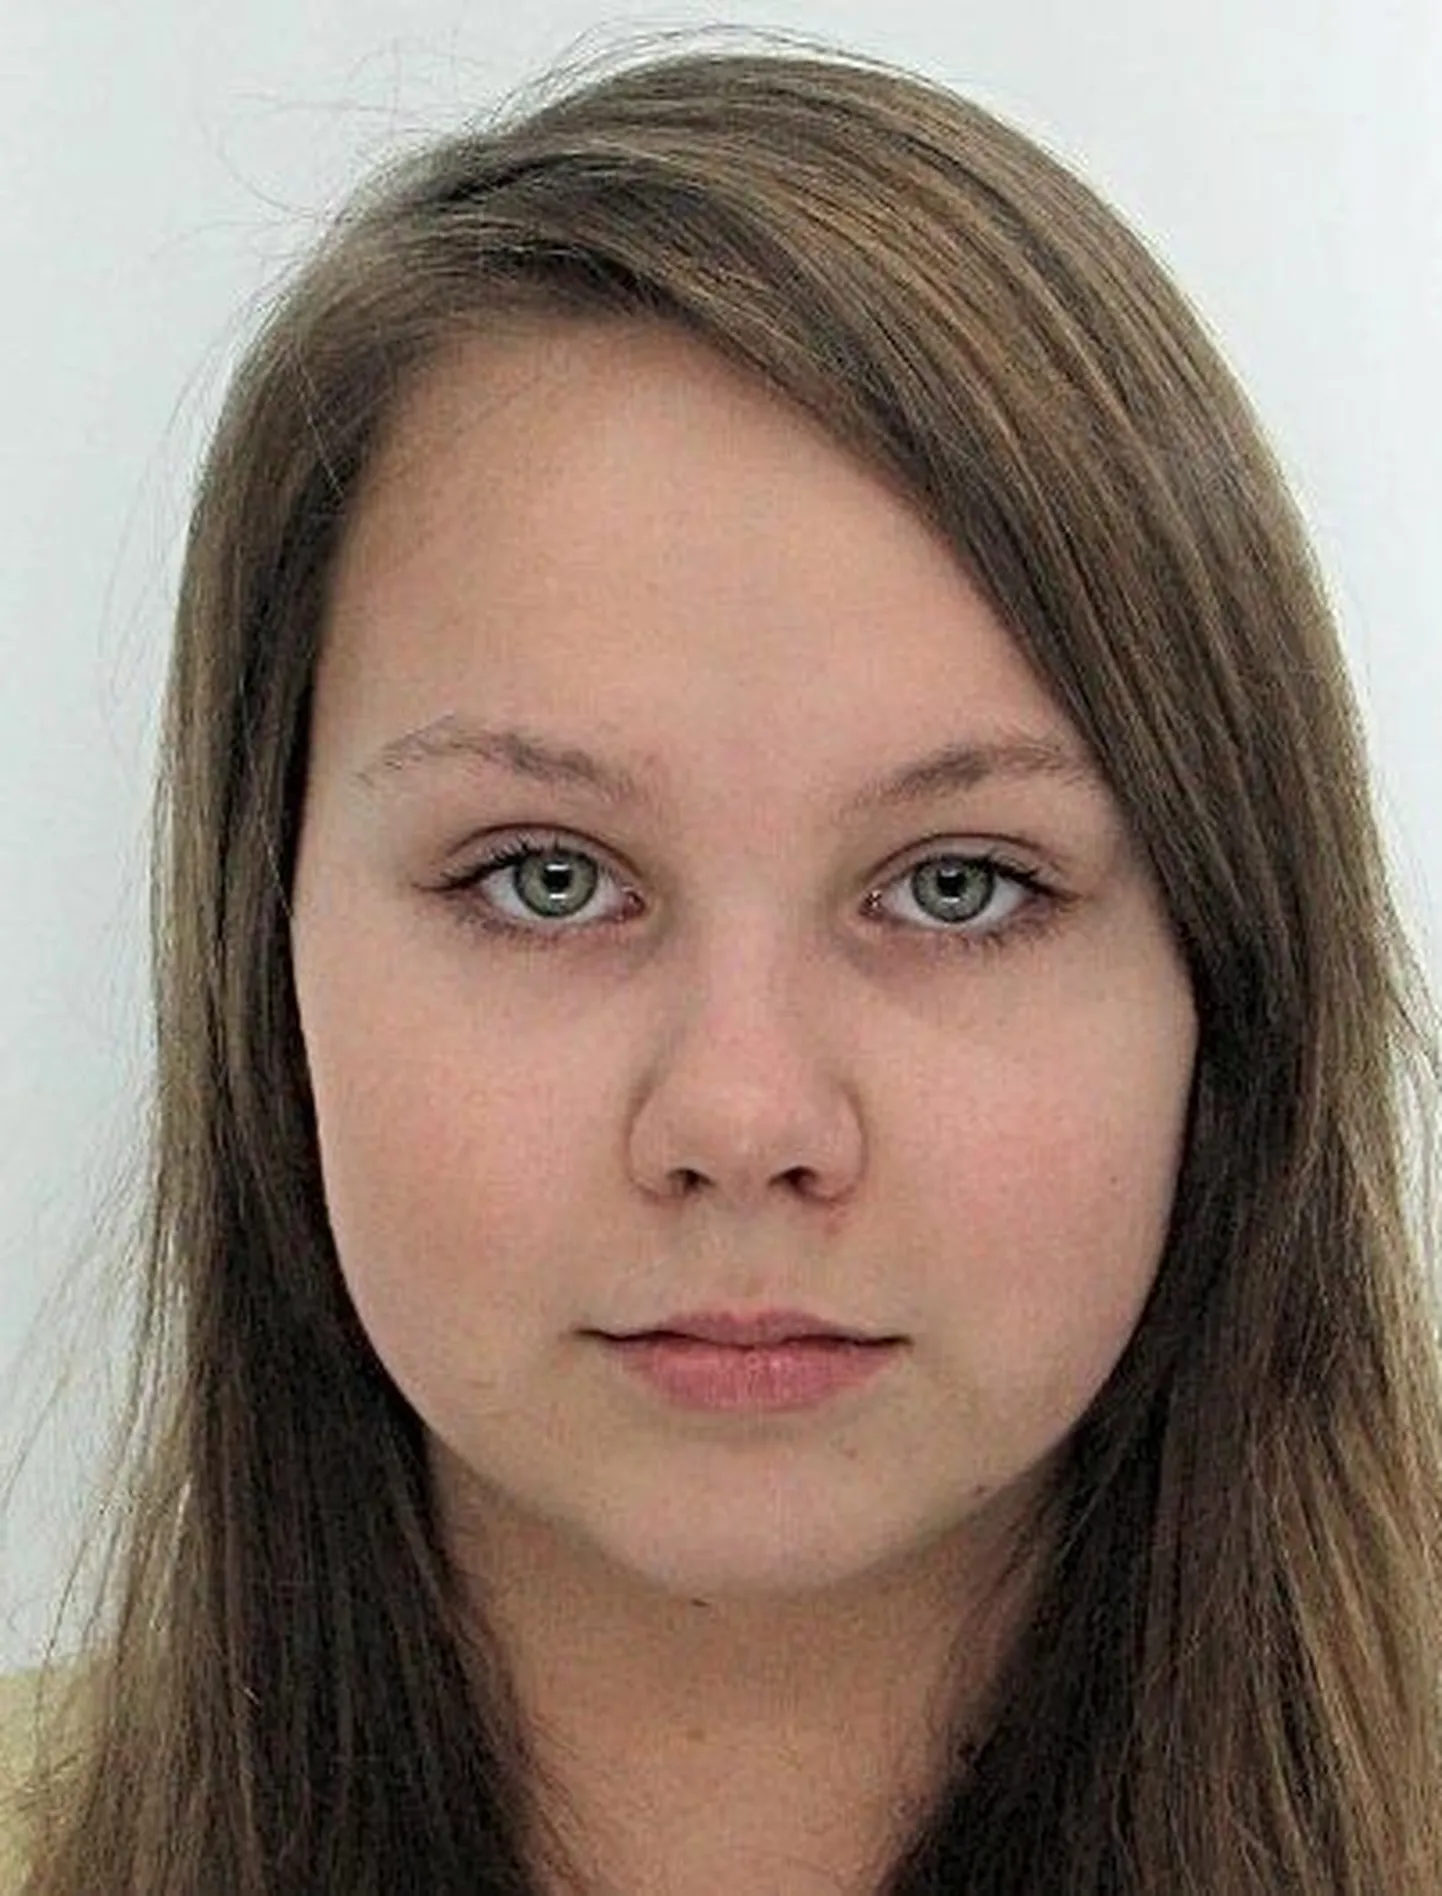 Полиция разыскивает 17-летнюю Ангелину.